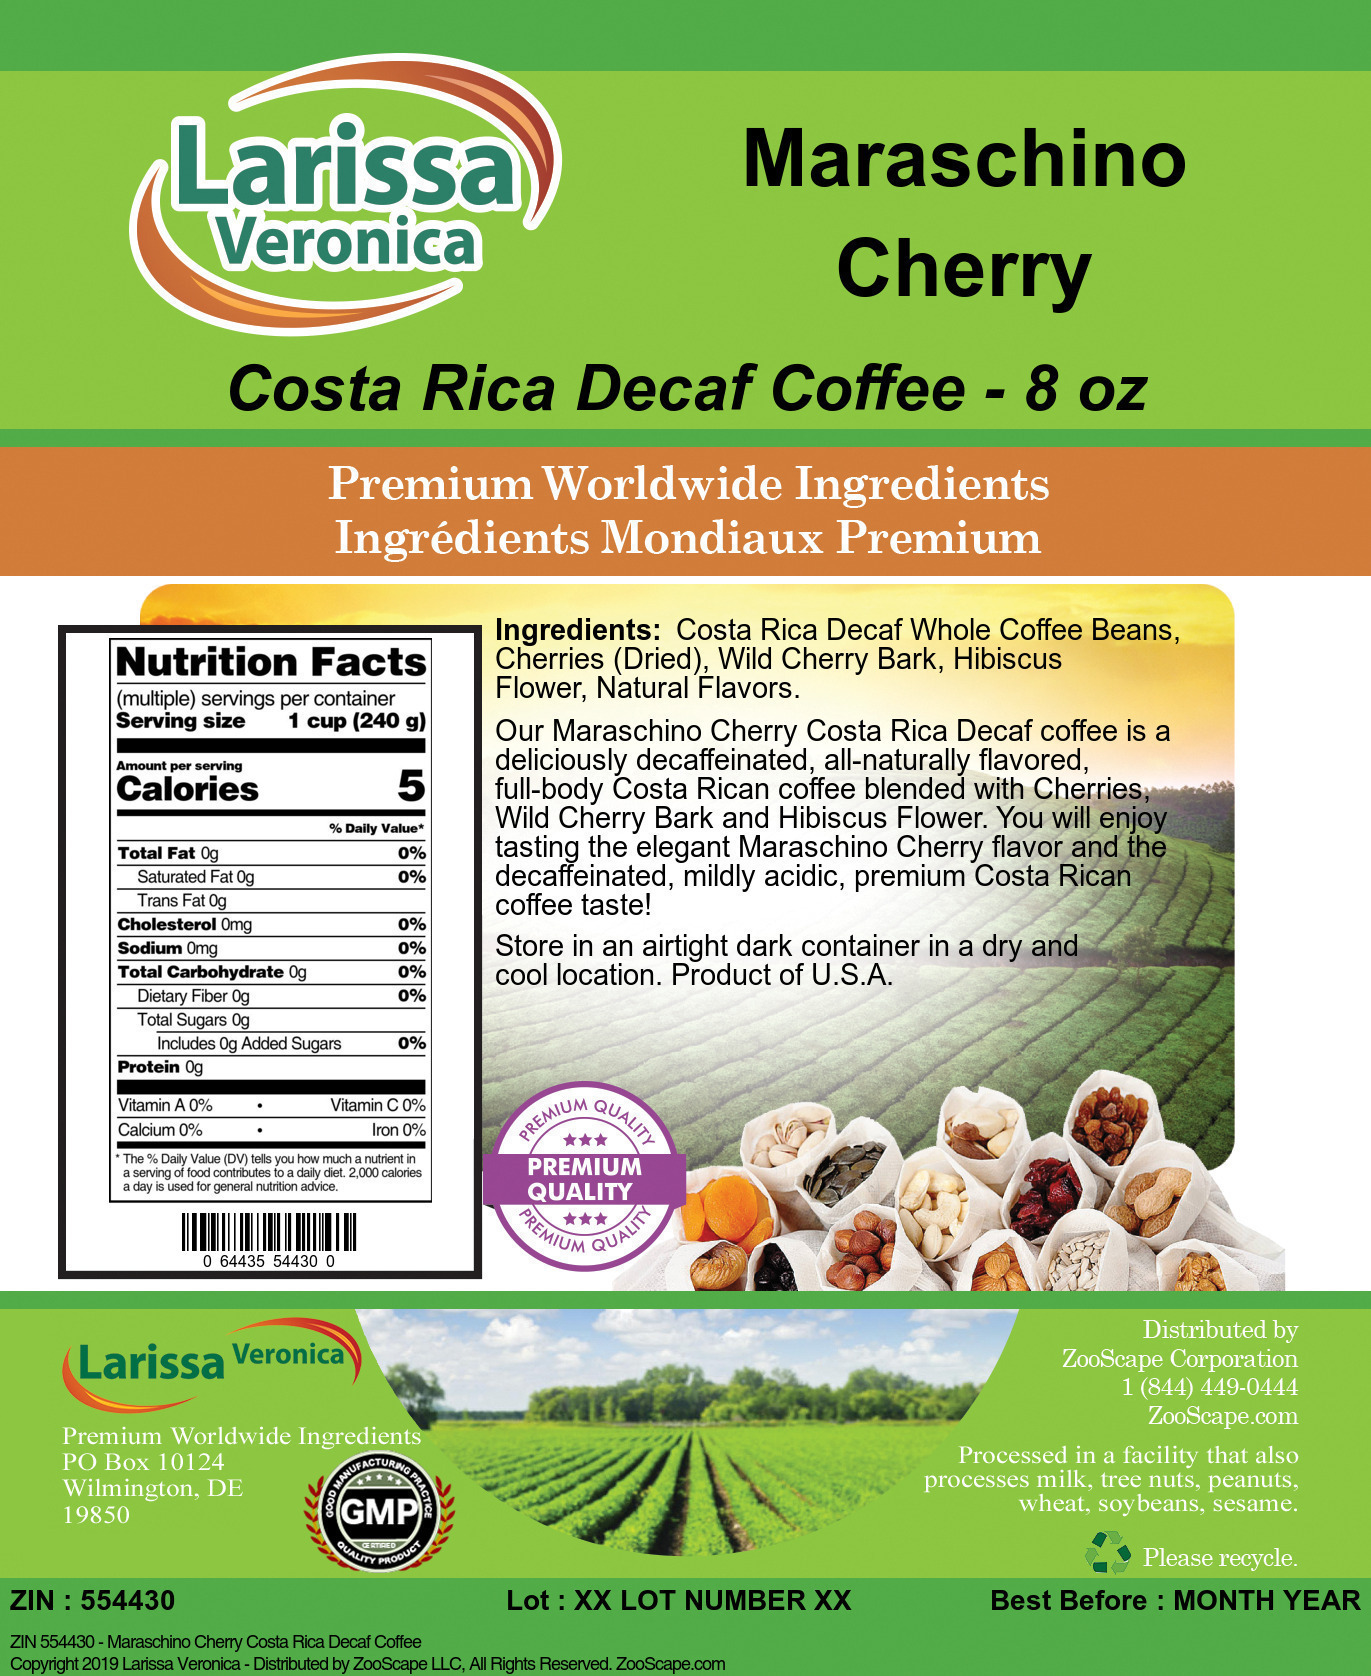 Maraschino Cherry Costa Rica Decaf Coffee - Label